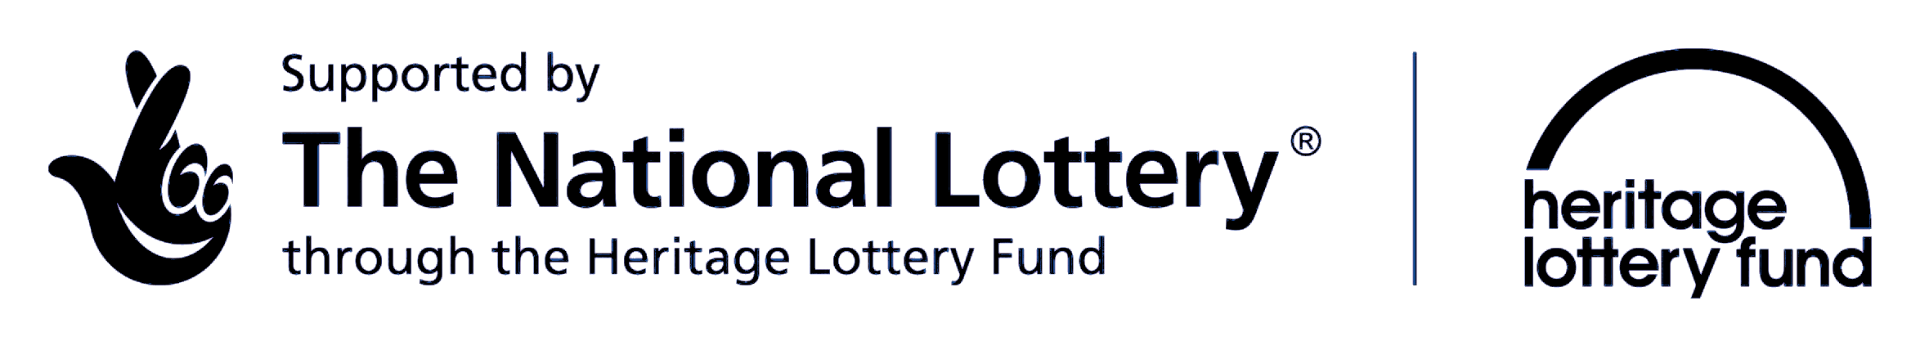 Heritage lottery fund award